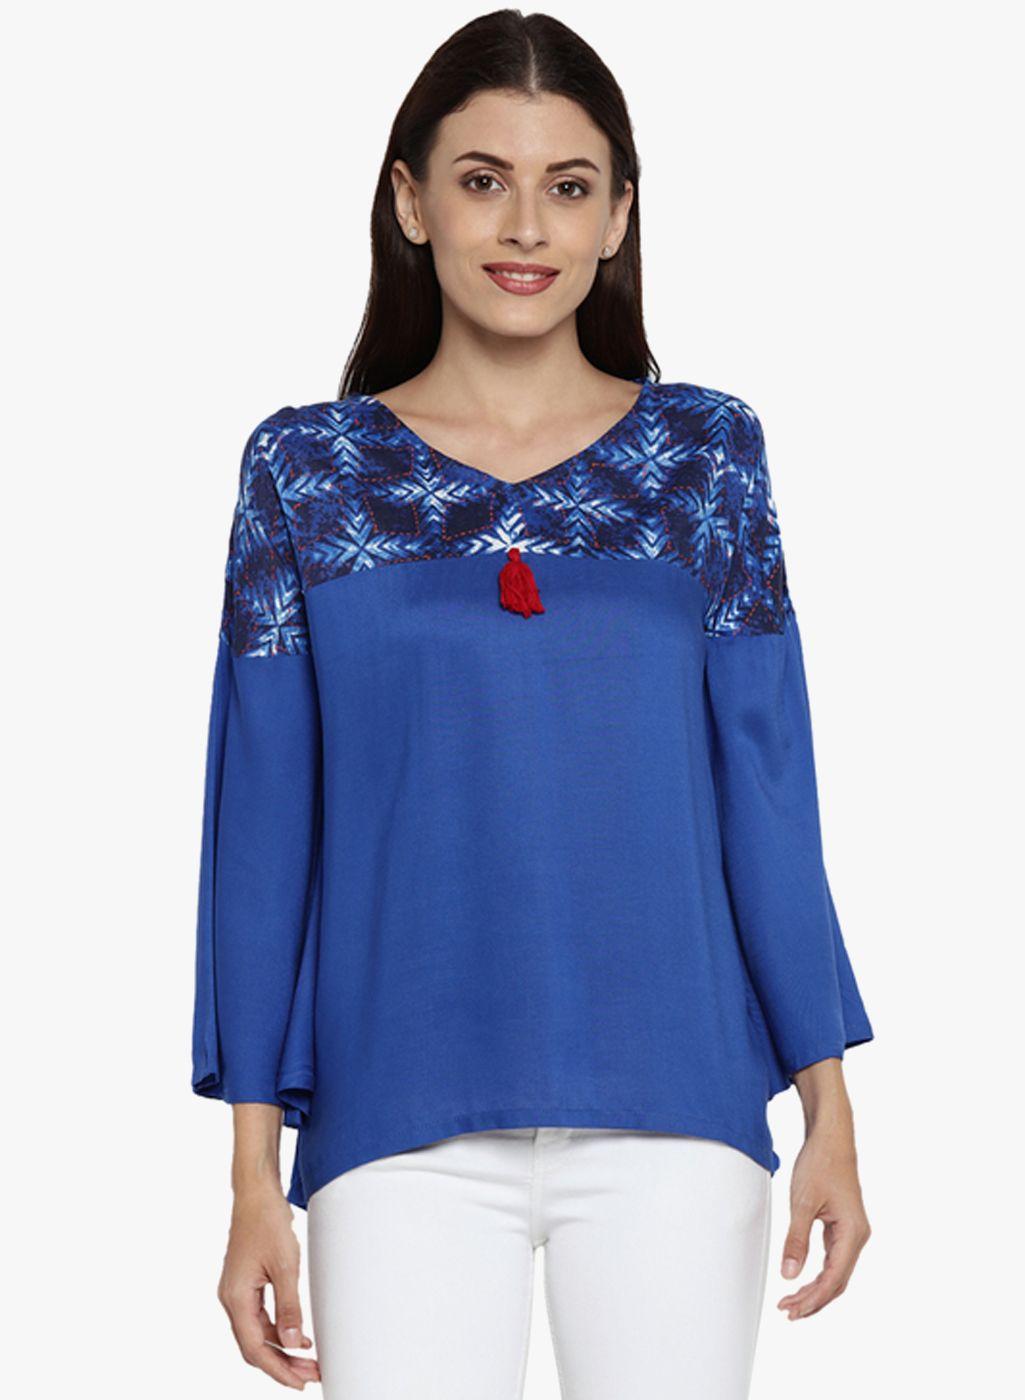 akkriti by pantaloons blue printed blouse